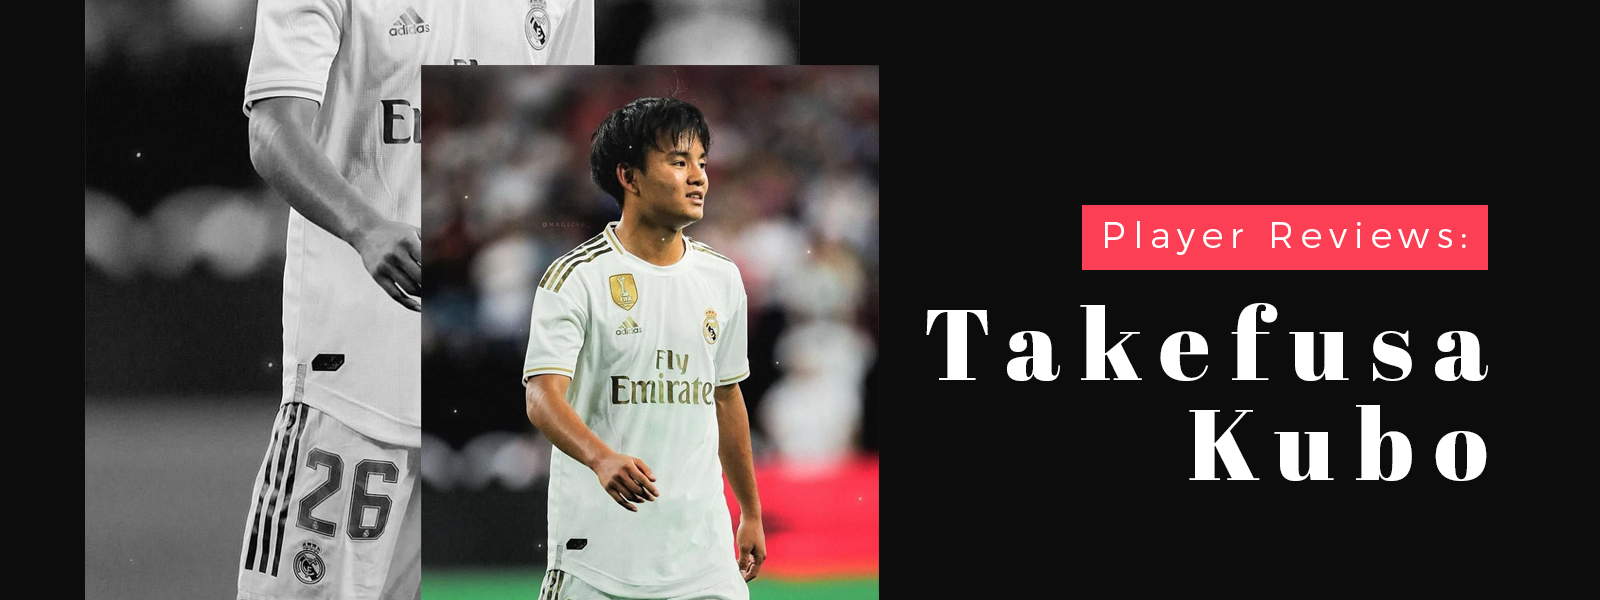 Professional Soccer Player Takefusa Kubo